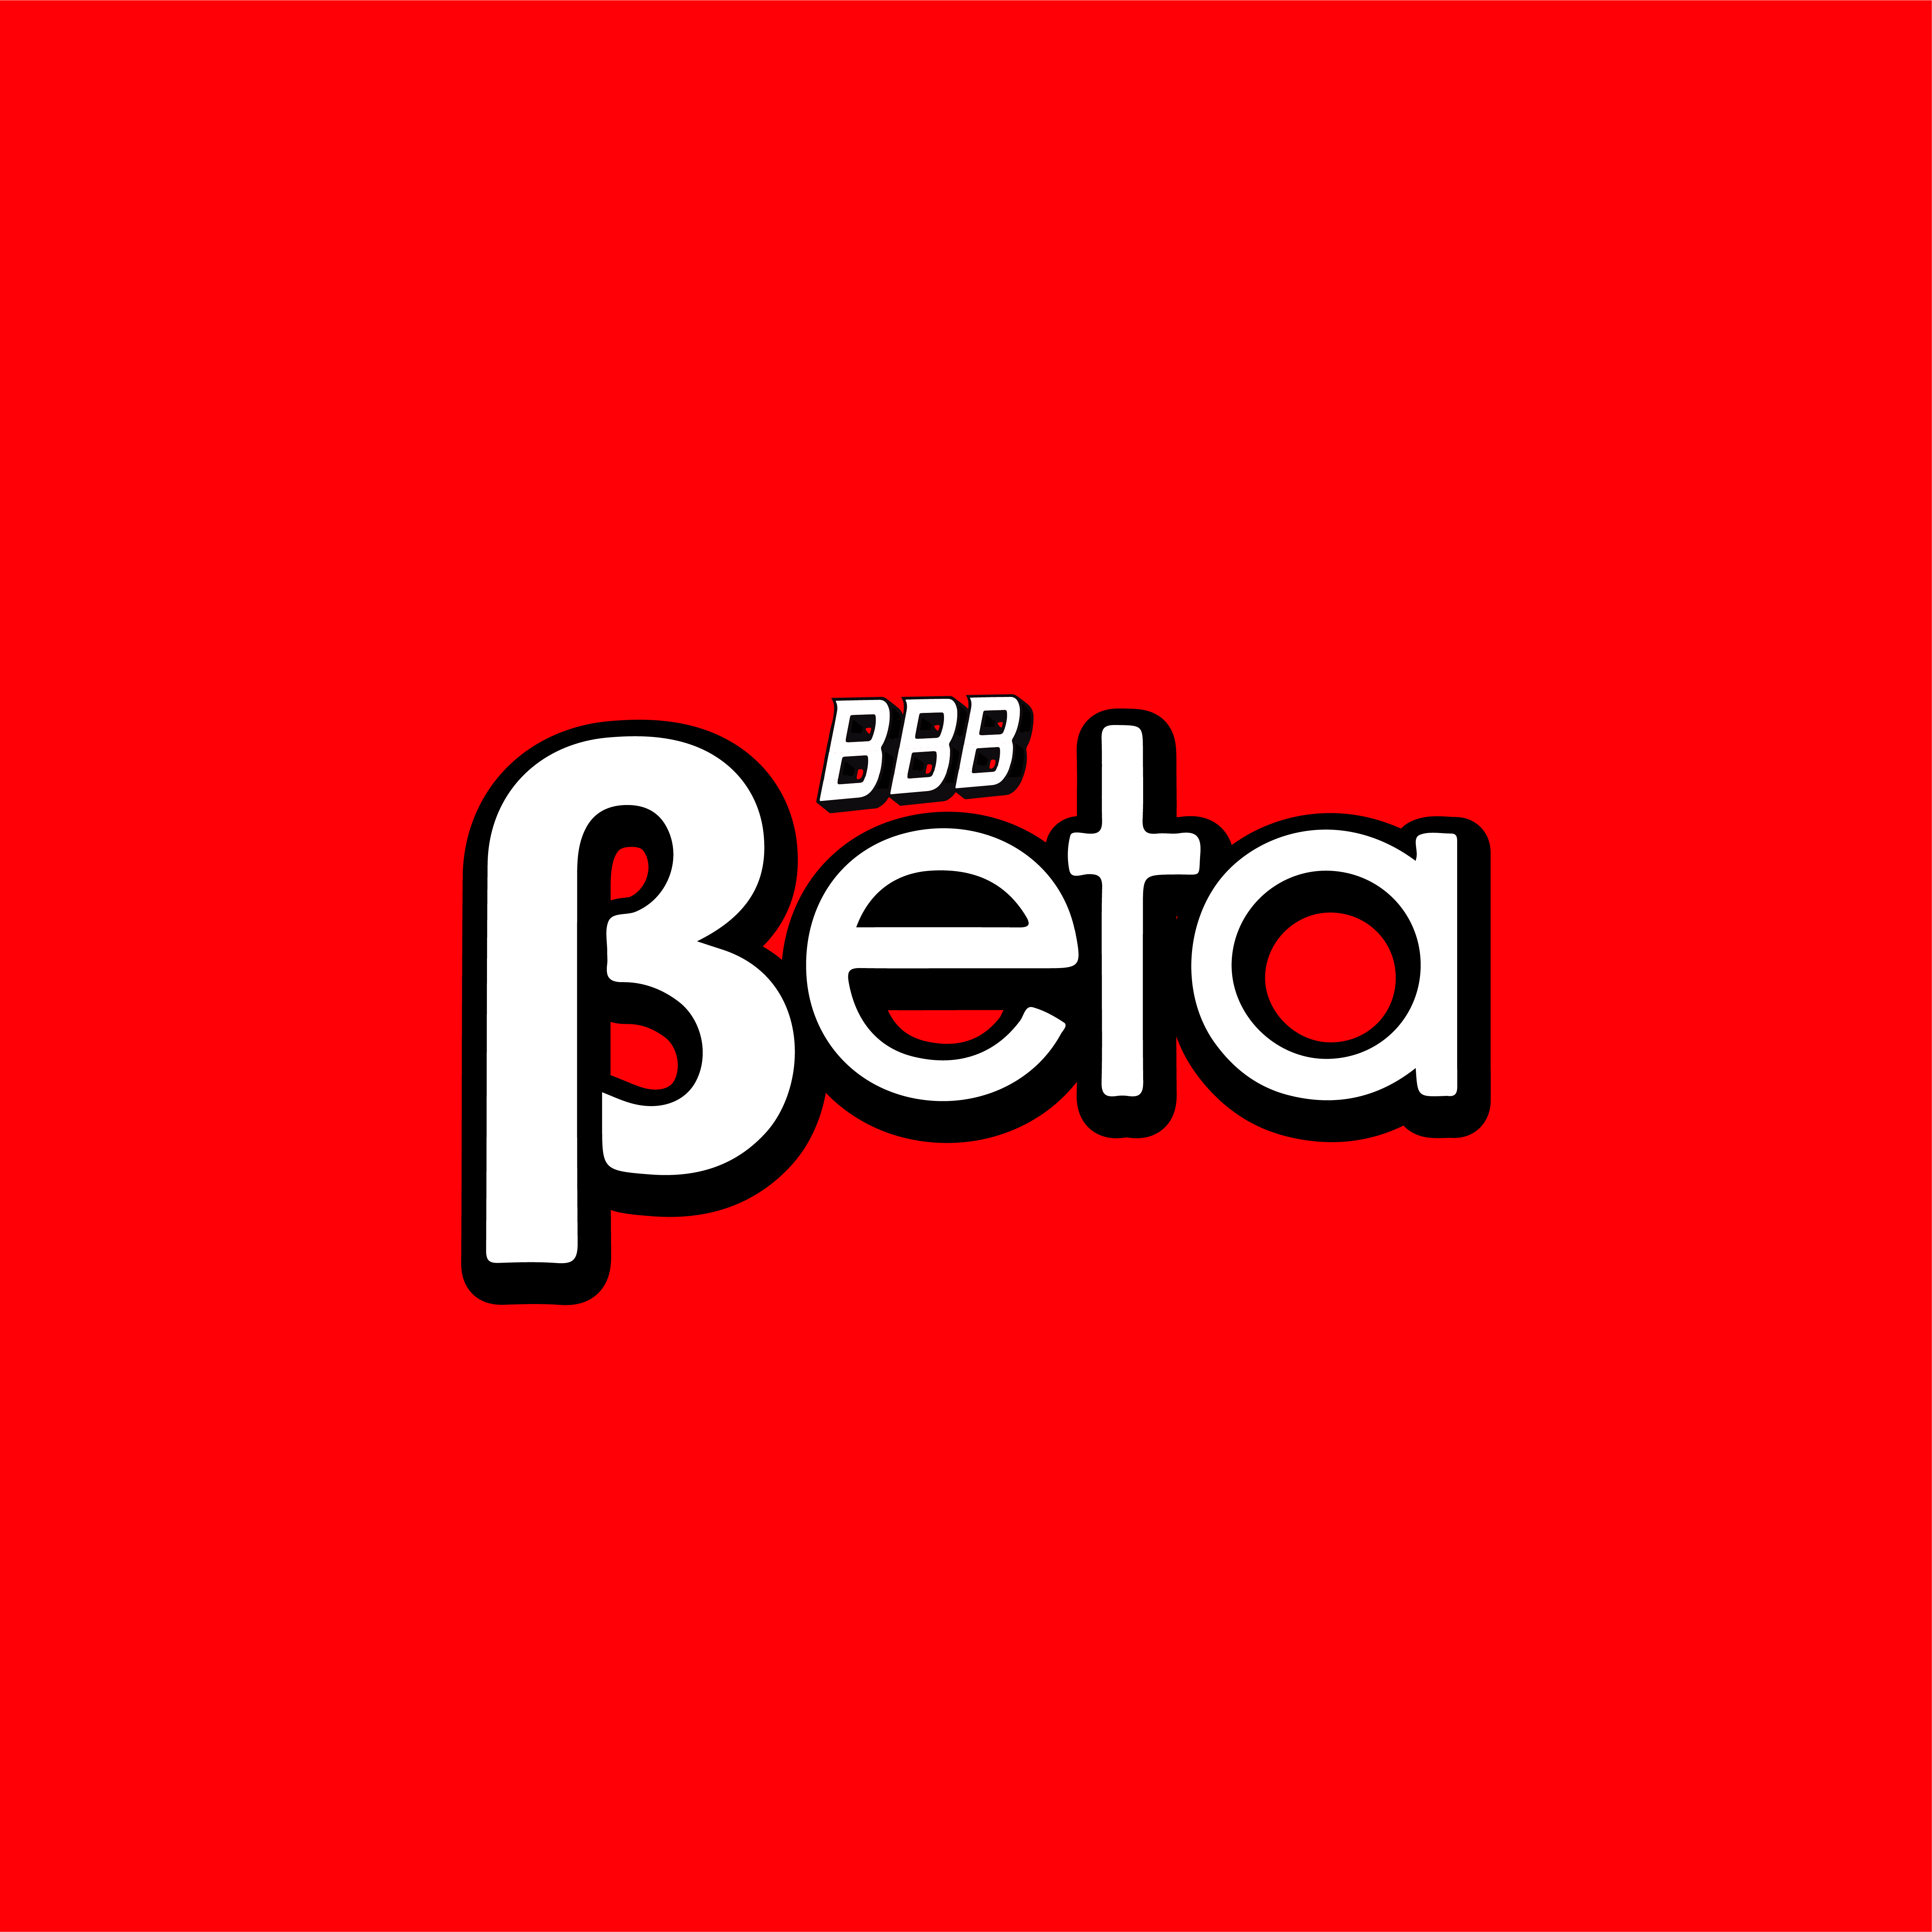 BBB Beta